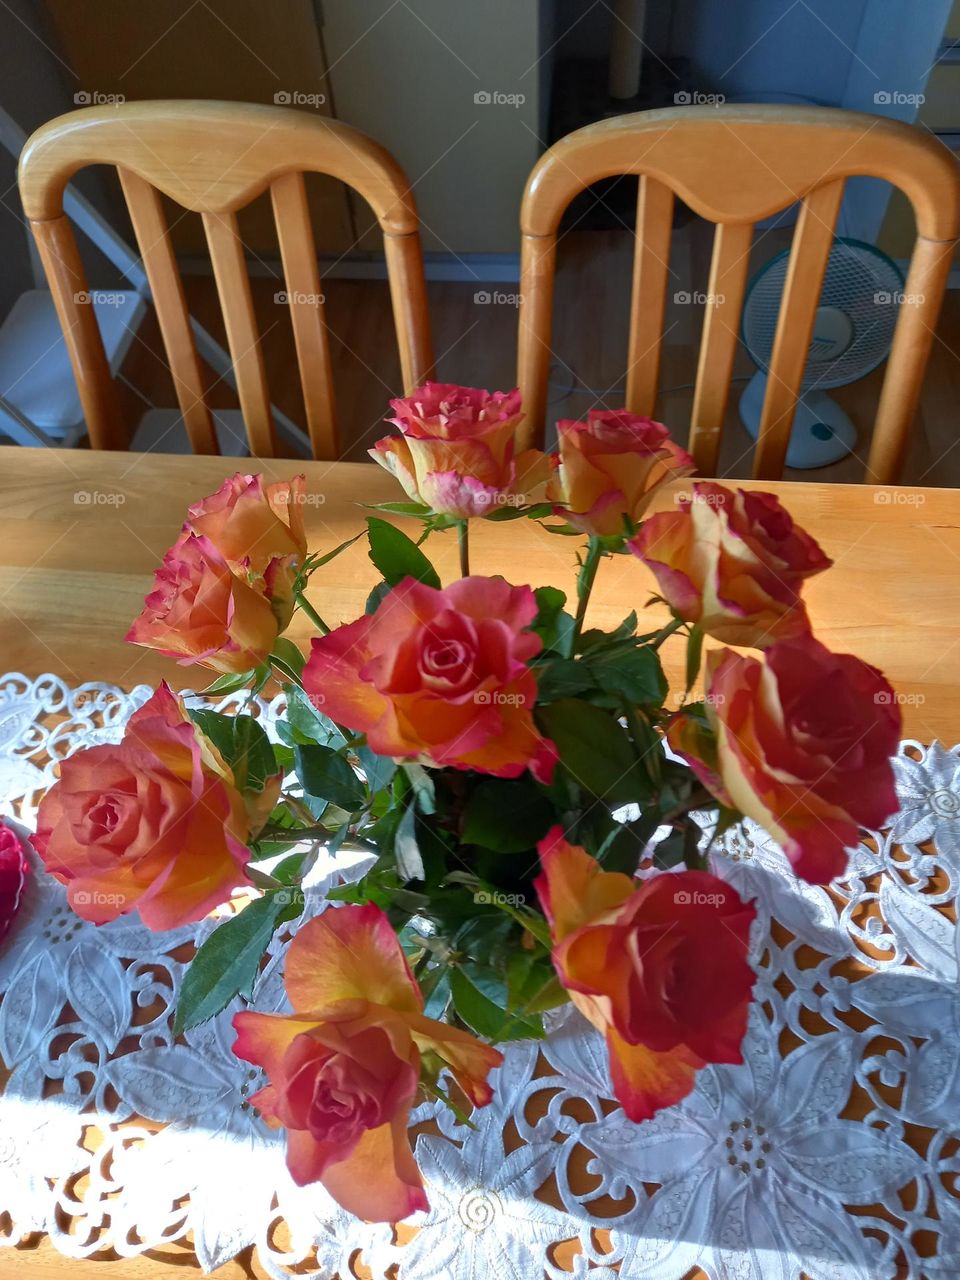 roses in a vase